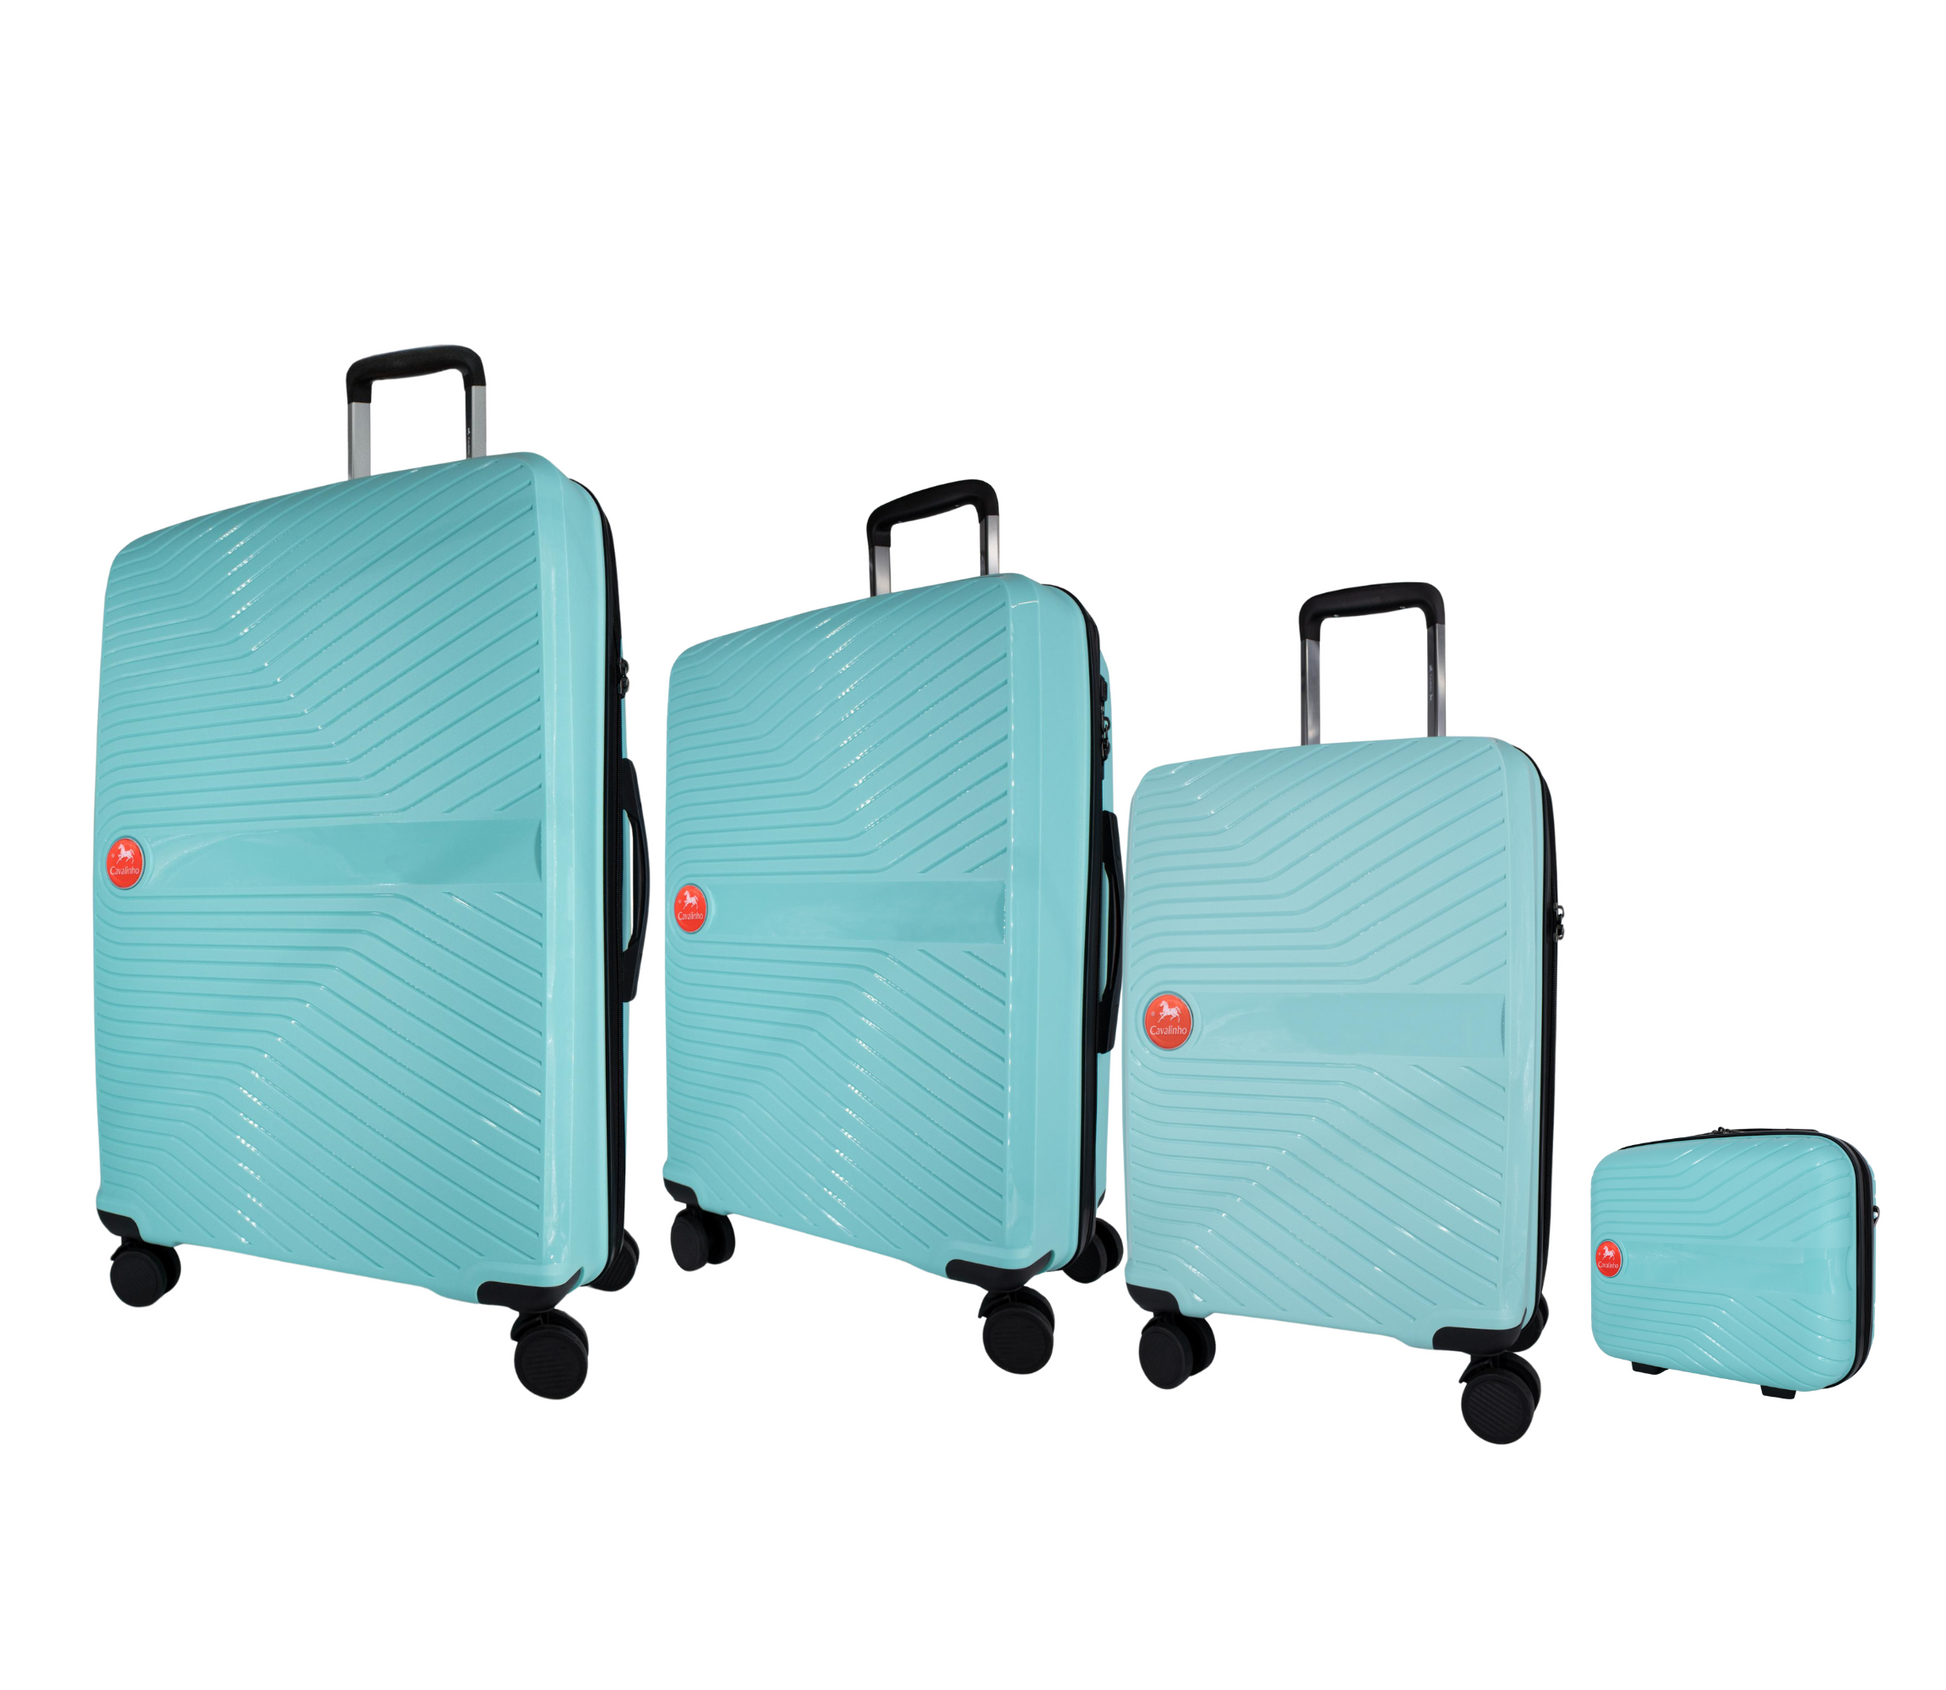 Cavalinho Canada & USA 4 Piece Set of Colorful Hardside Luggage (15", 19", 24", 28") - LightBlue - 68020004.10.S4_3